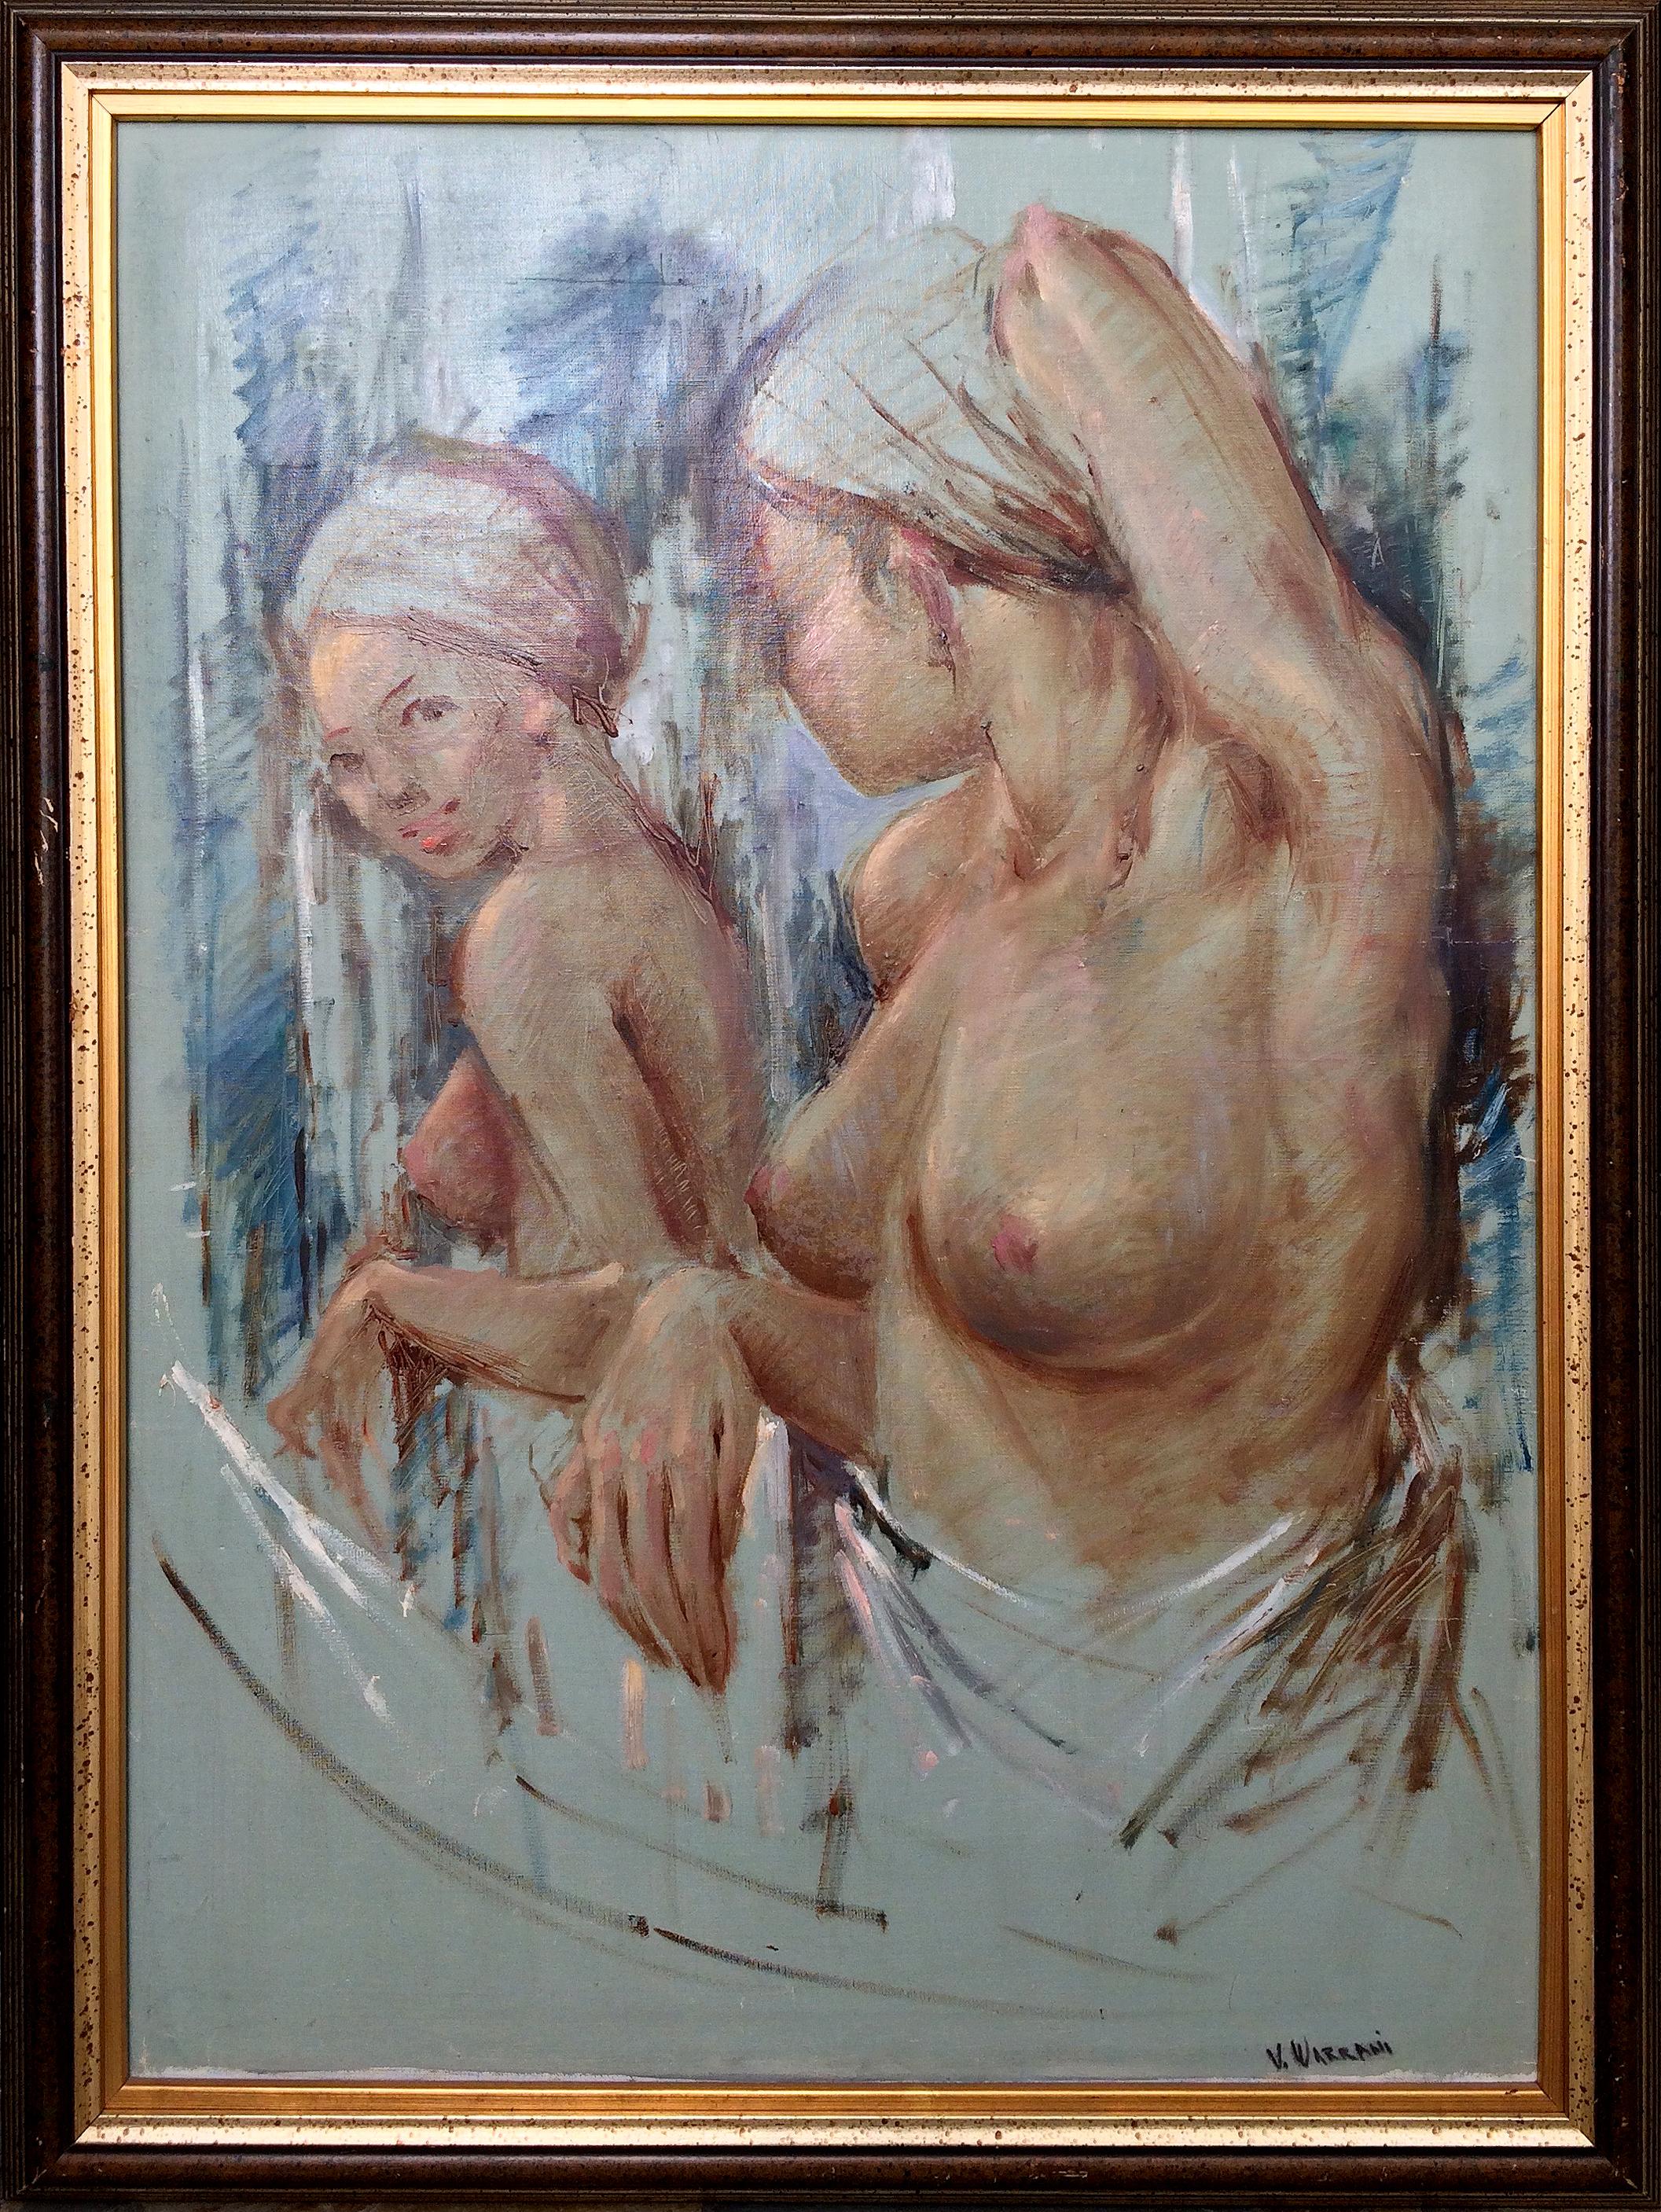 V. Warrami; Mirror reflection; oil on canvas 1